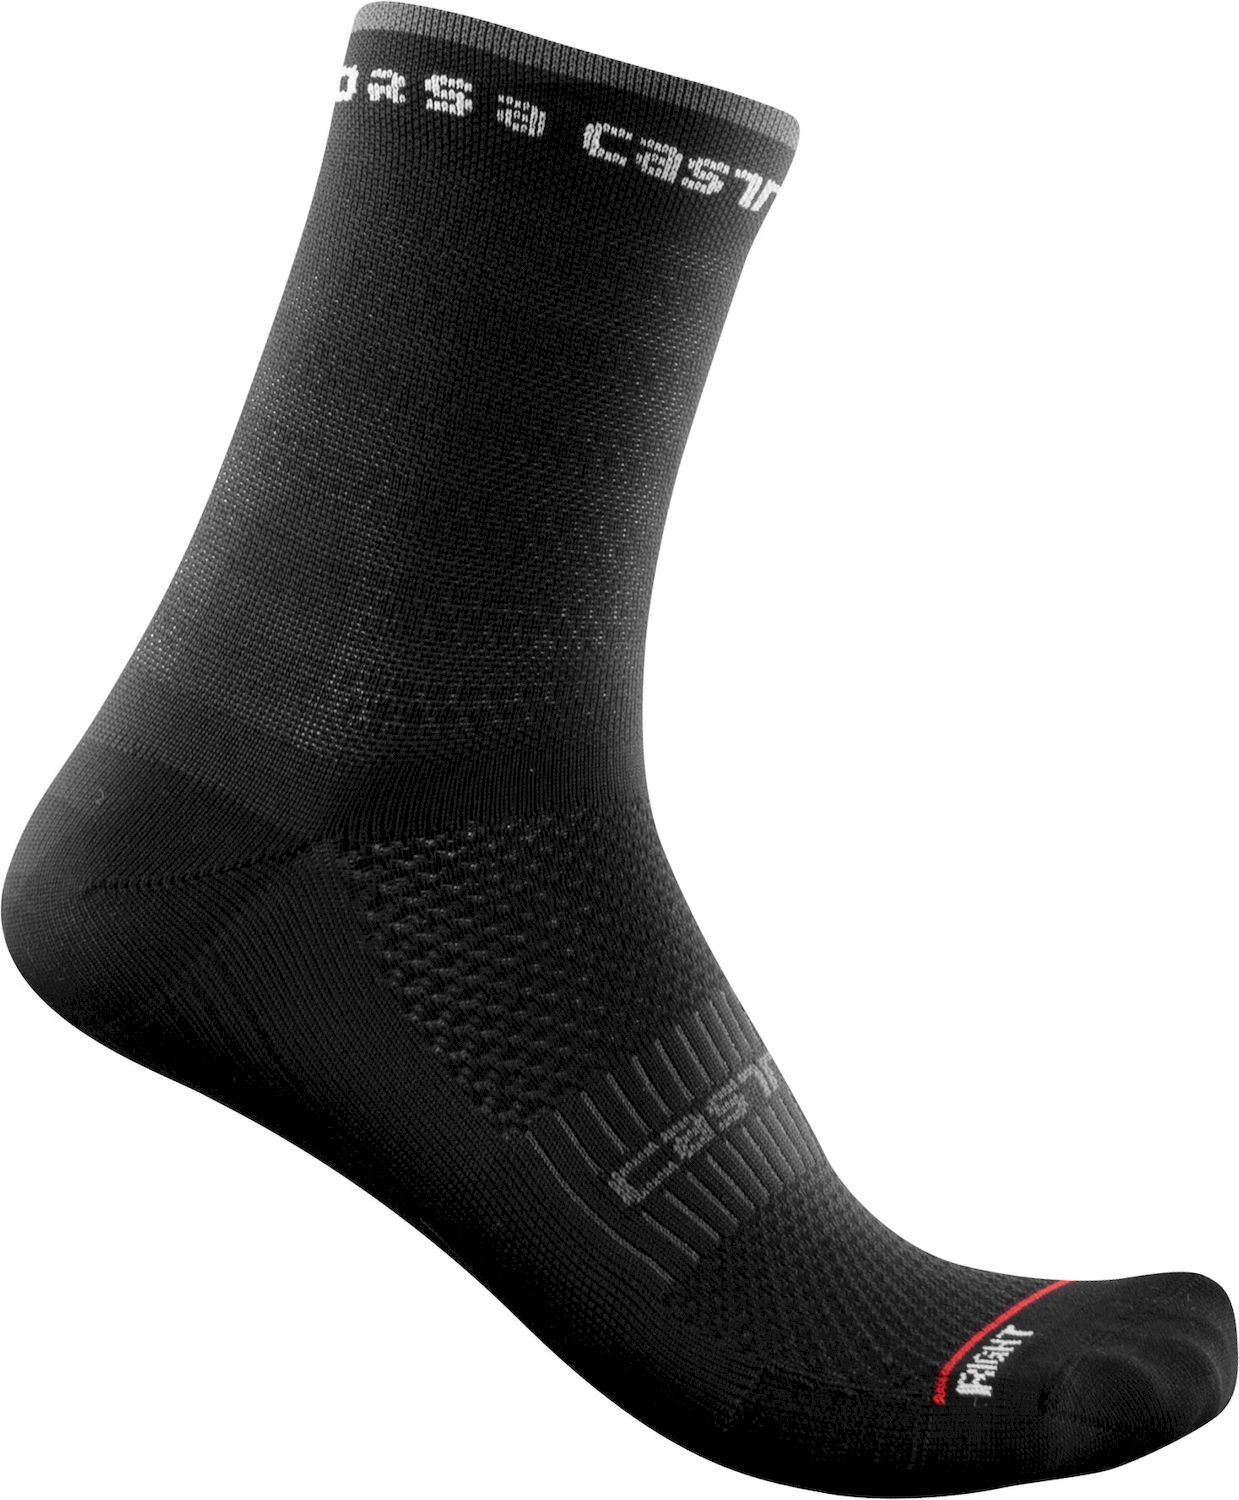 Castelli Rosso Corsa 11 - Cycling socks - Women's